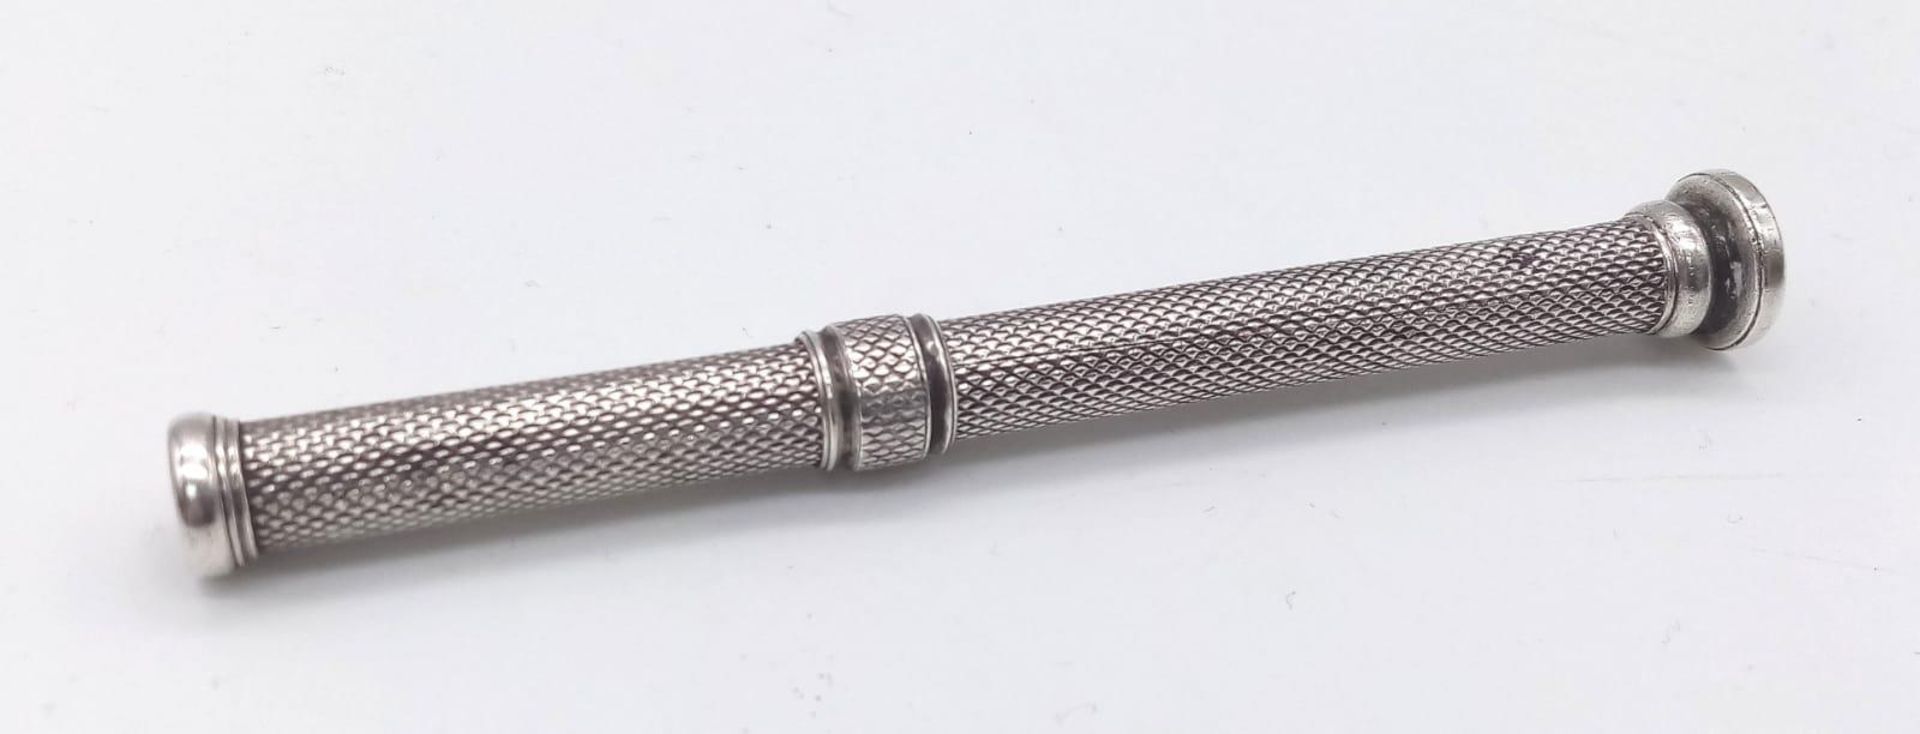 SAMPSON MORDAN & CO (1830-1845) Sliding Silver Propelling Pencil. A mid 19th century silver pencil